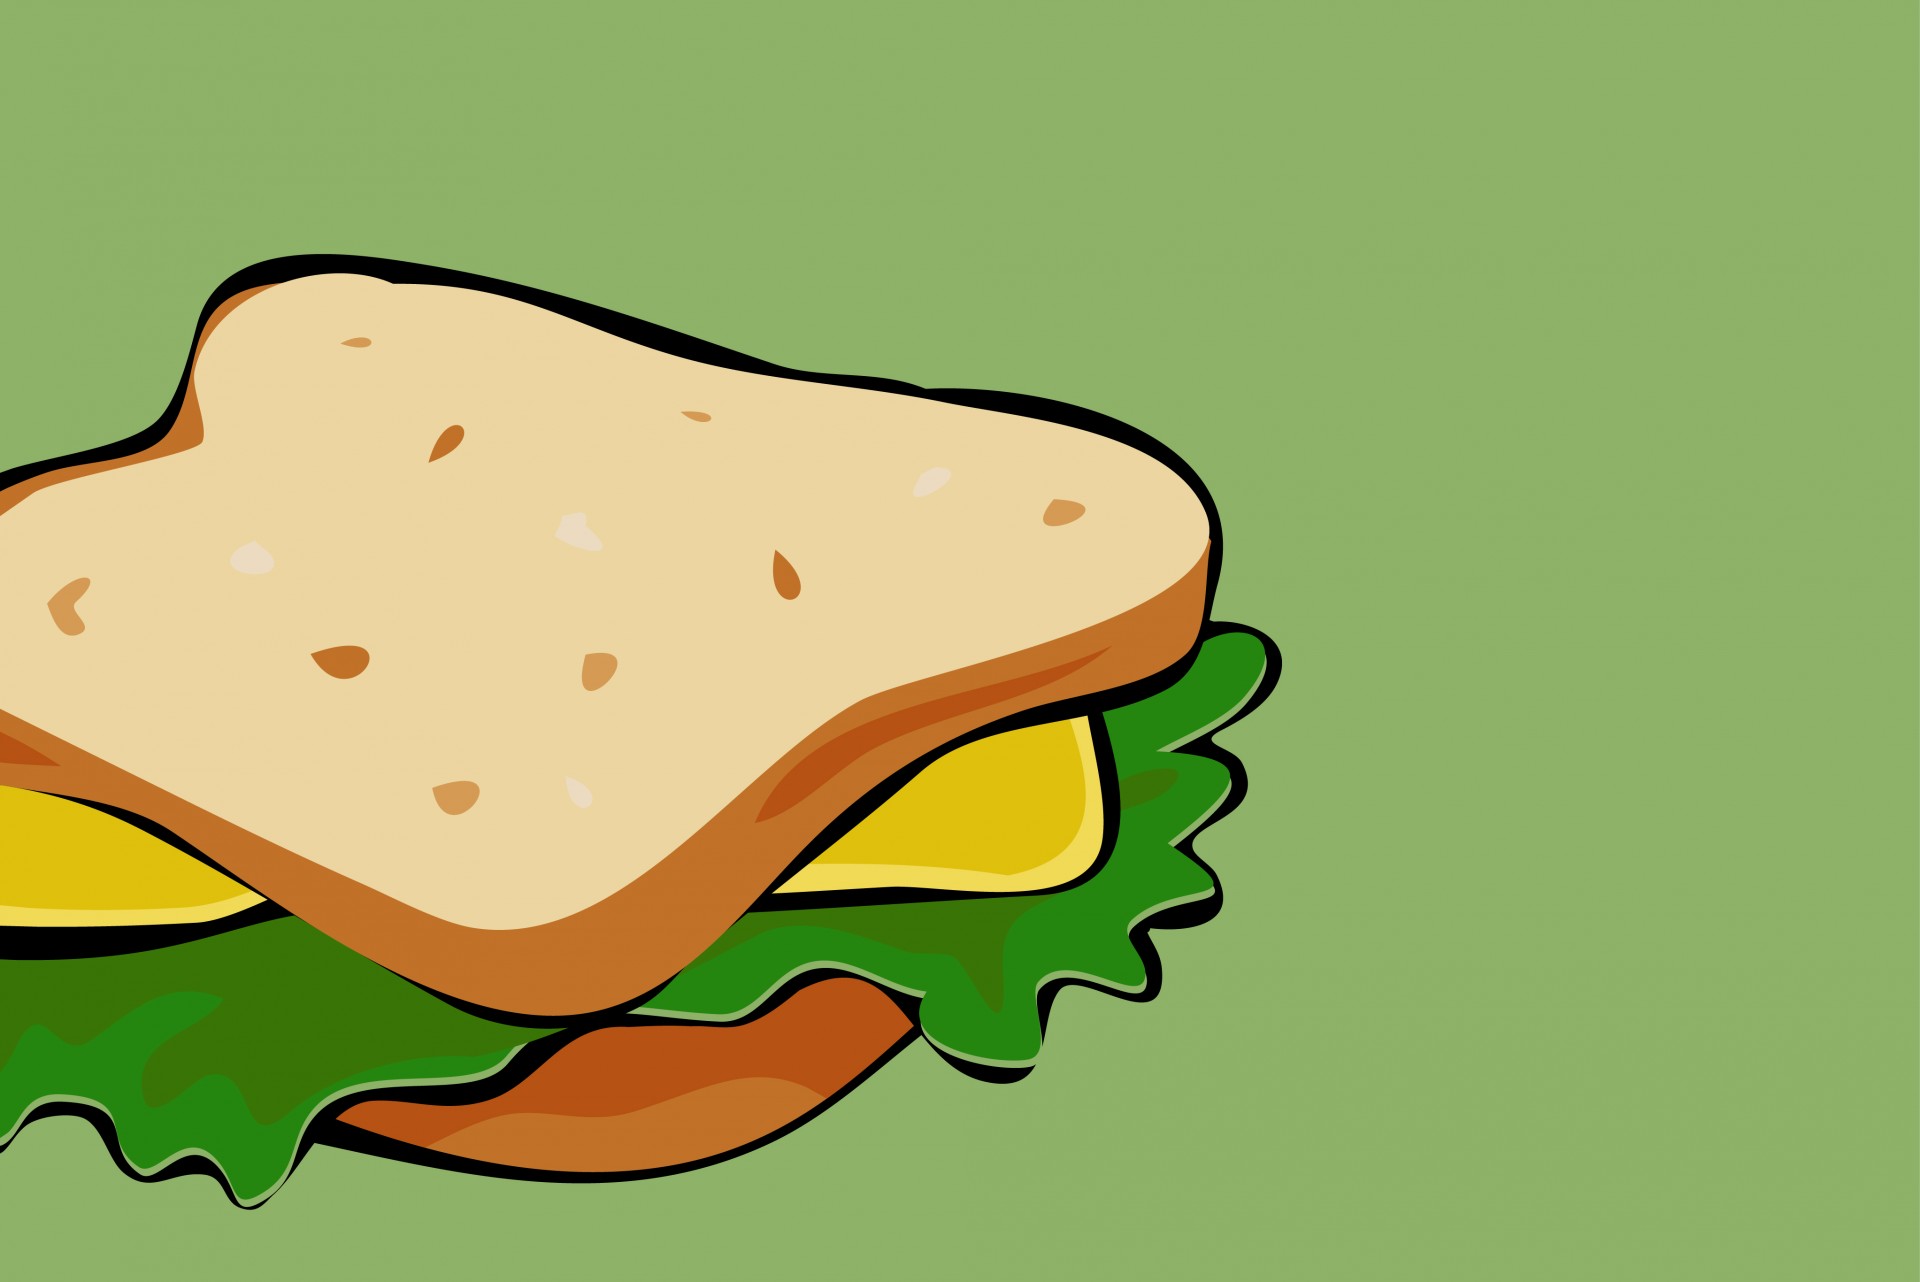 Salad Sandwich